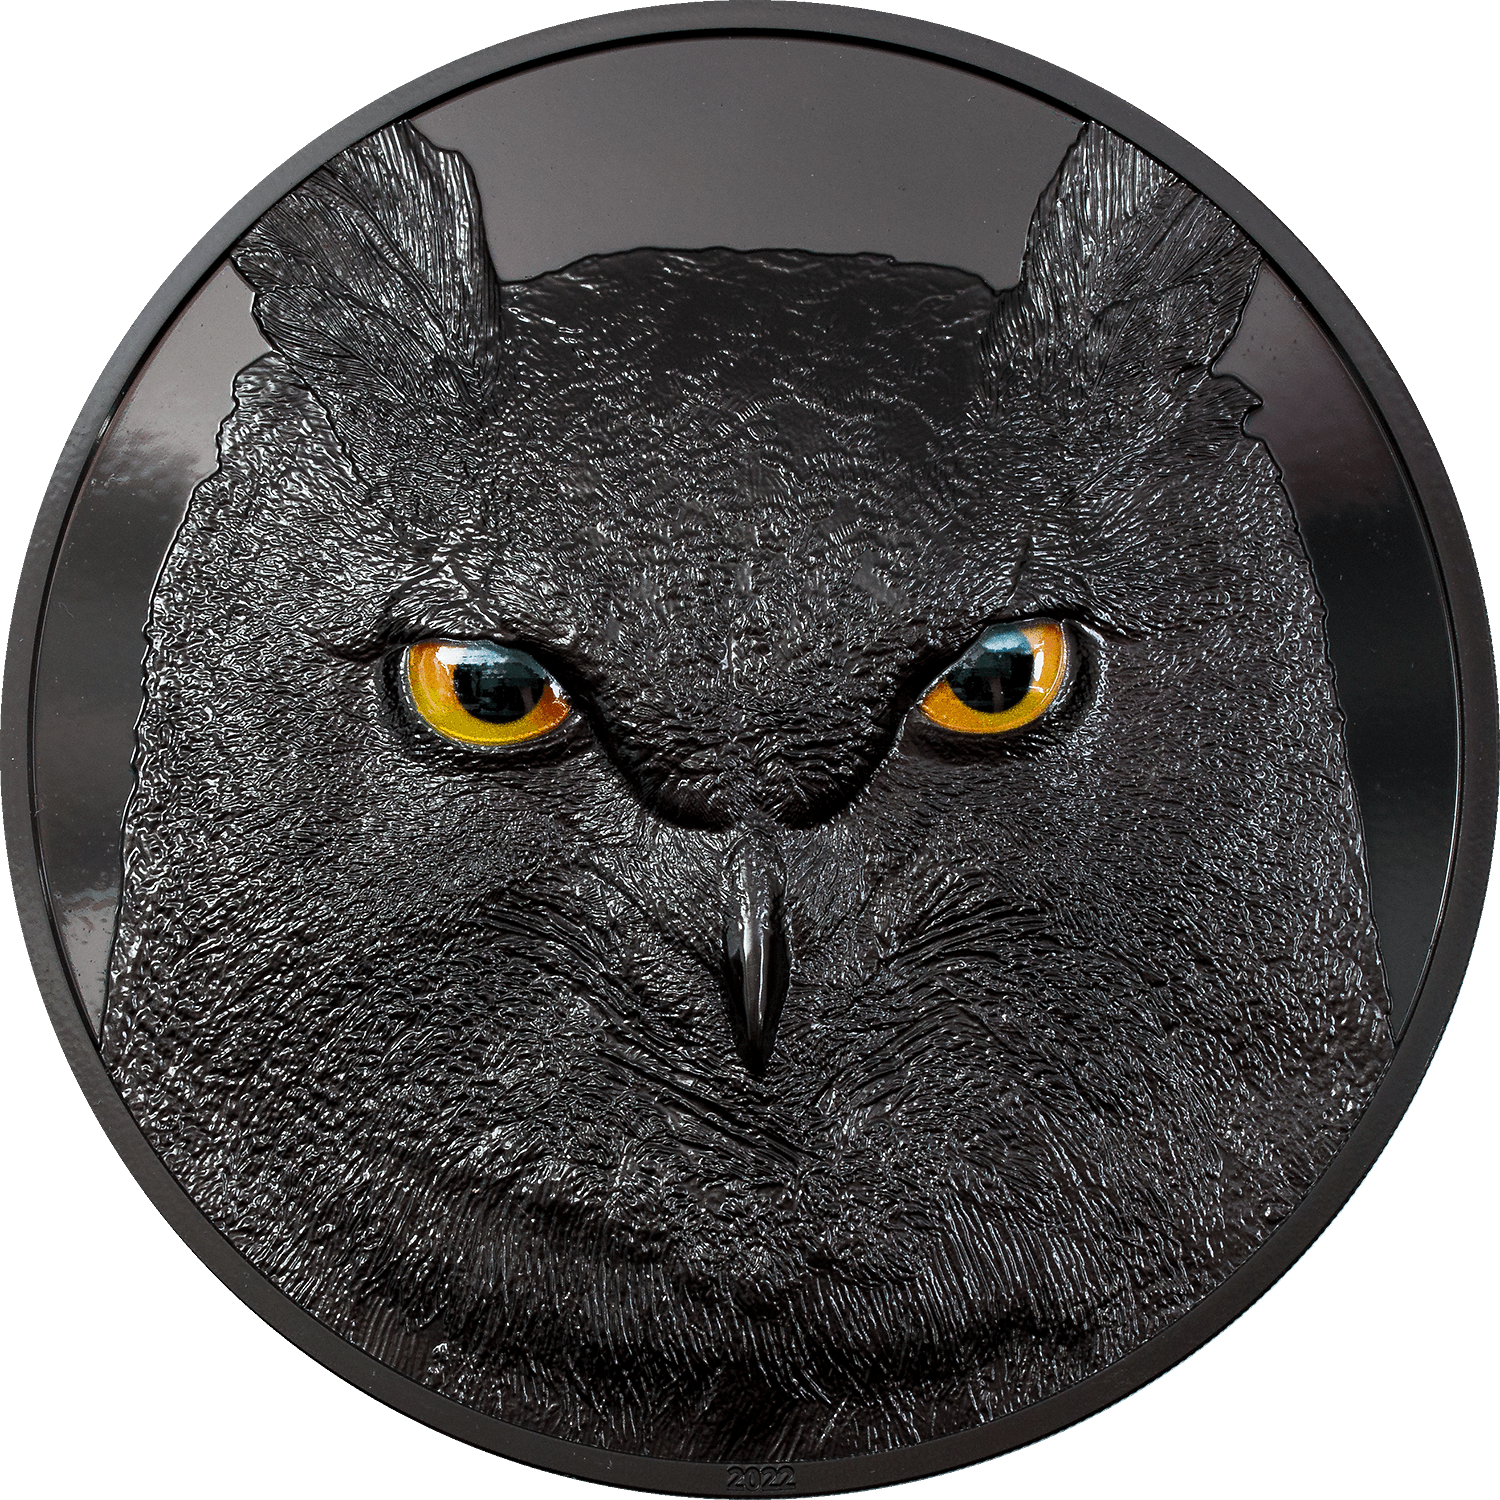 EAGLE OWL Hunters by Night 1 Kg Kilo Silver Coin $50 Palau 2022 - PARTHAVA COIN